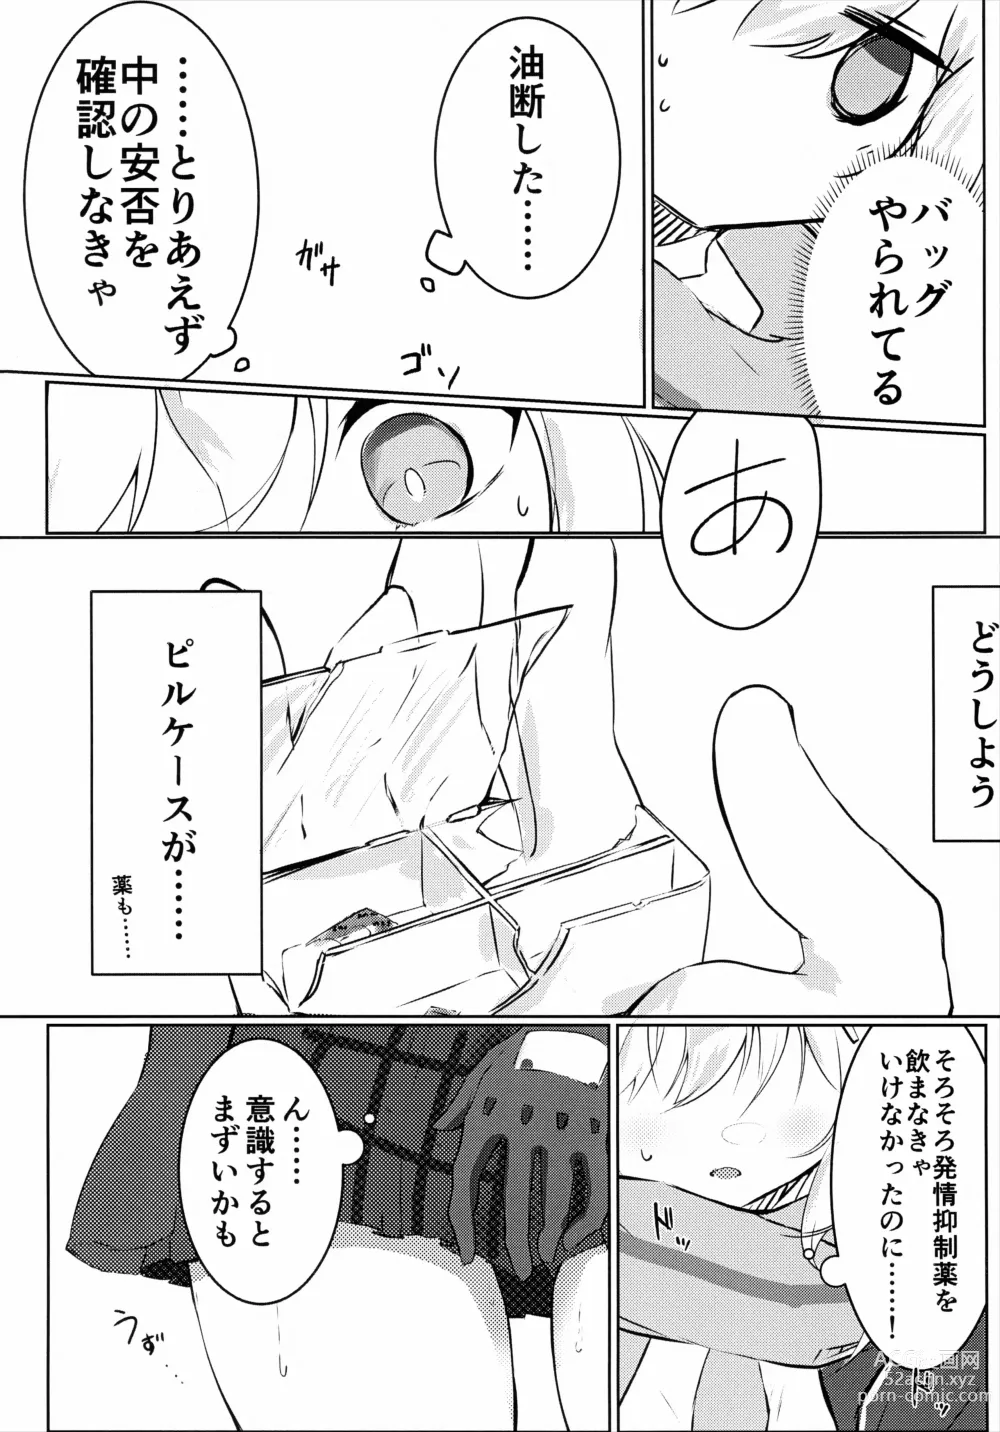 Page 3 of doujinshi Hakusyoku Aisei